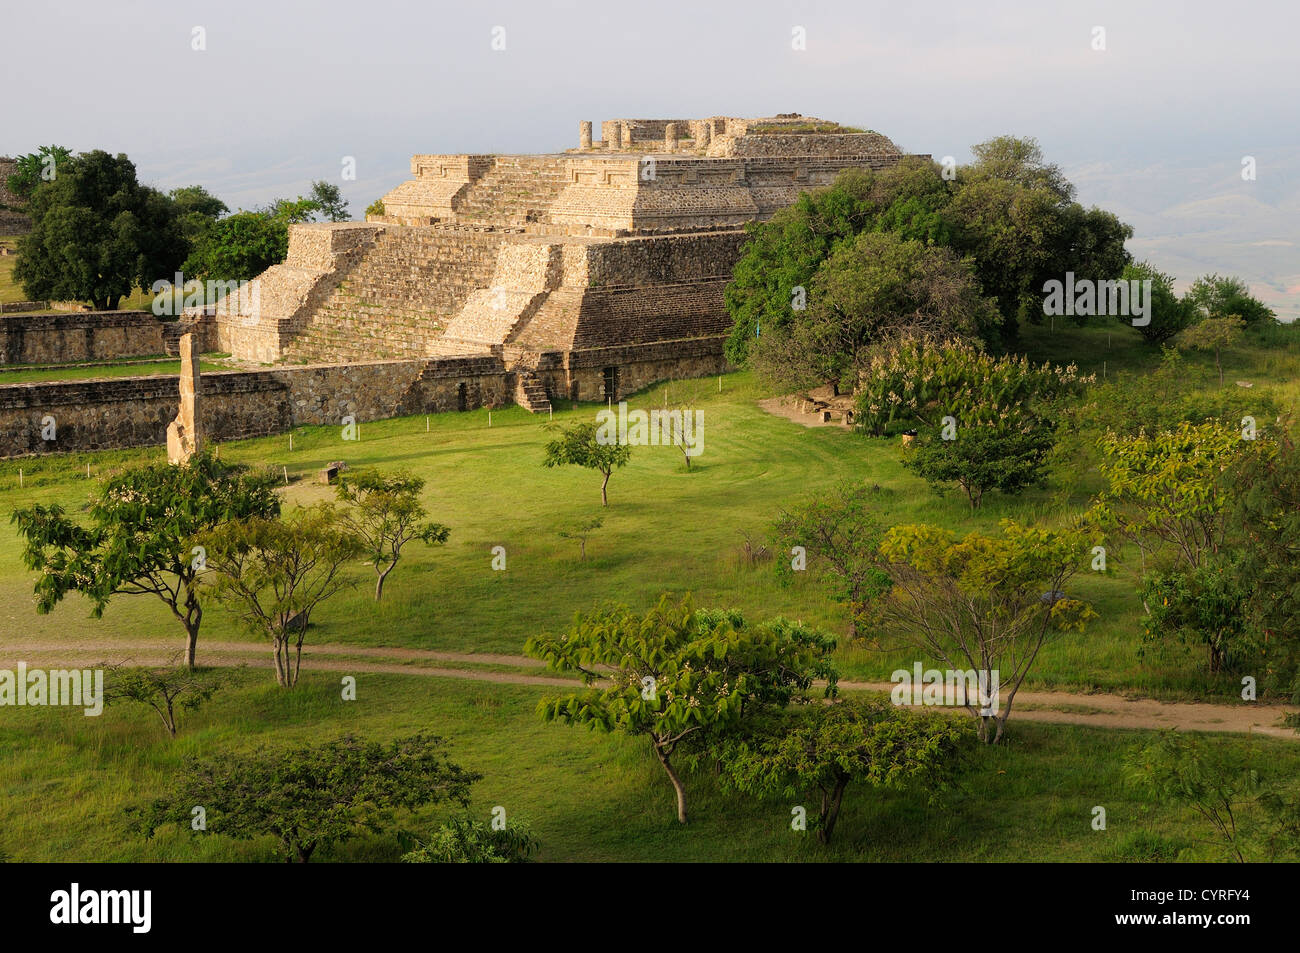 Mexico, Oaxaca, Monte Alban archaeological site ruins, Sistema IV pyramid building. Stock Photo